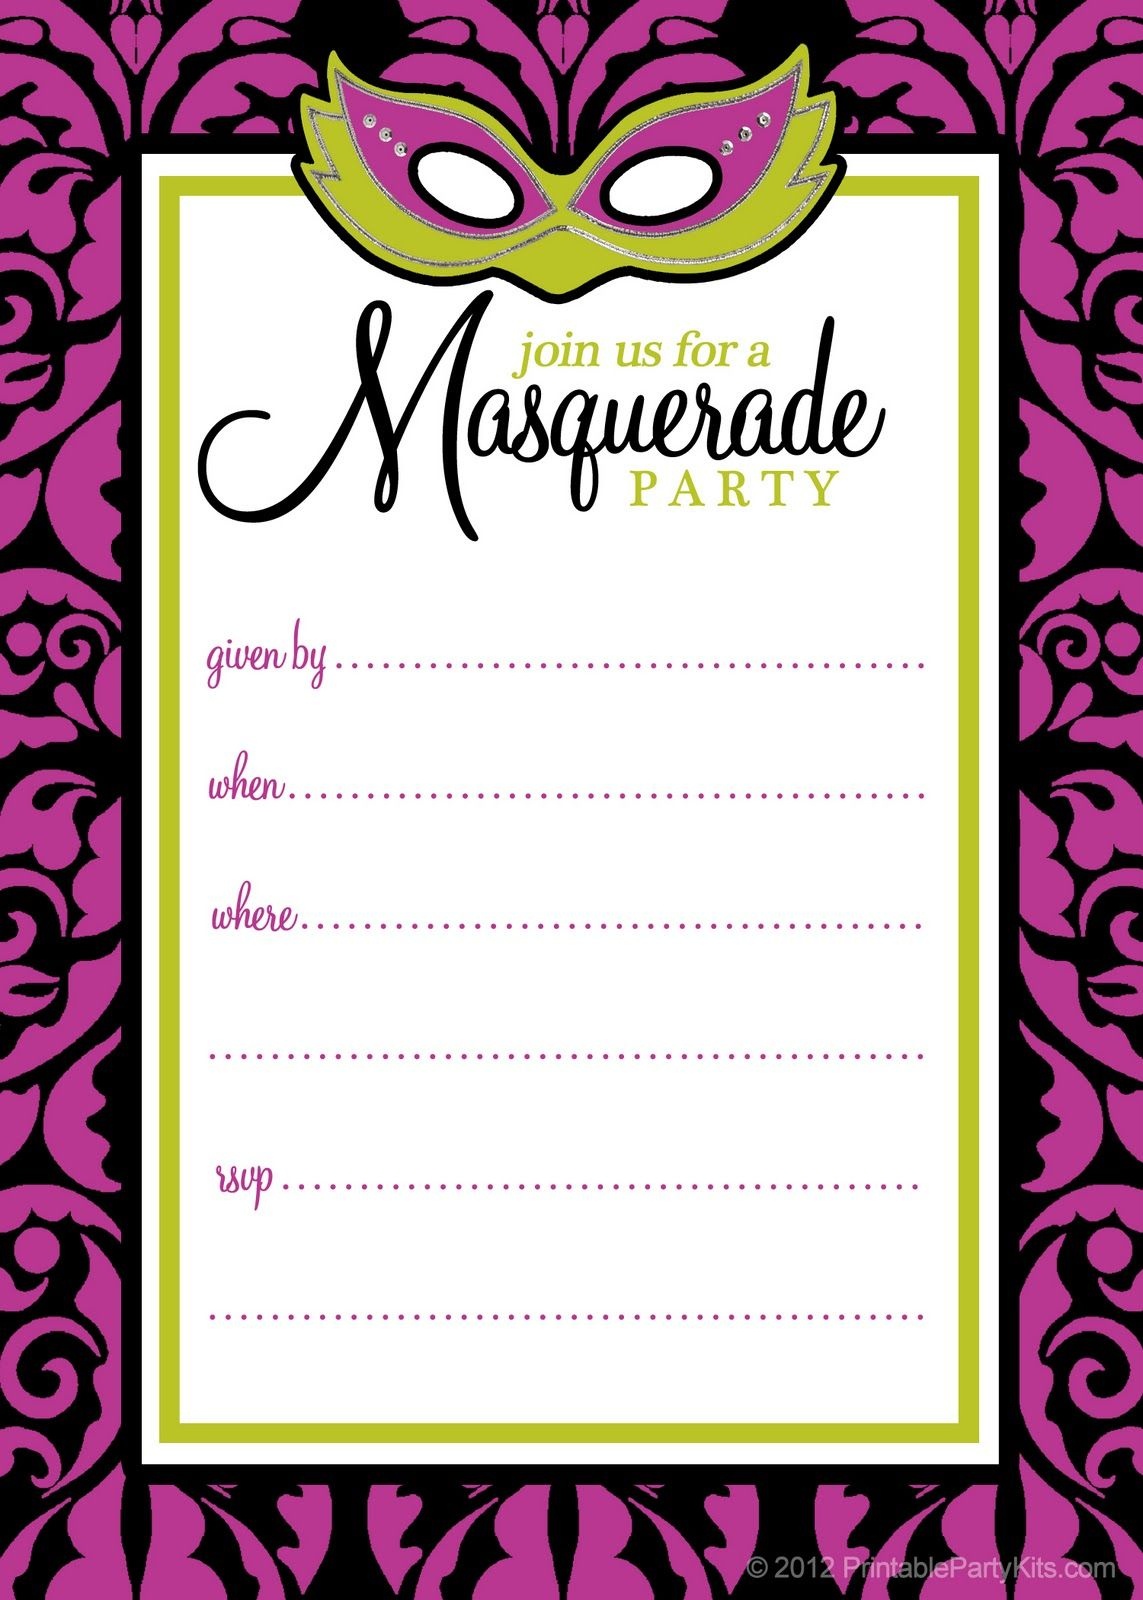 Free Printable Party Invitations: Masquerade Or Mardi Gras Party - Free Printable Masquerade Birthday Invitations